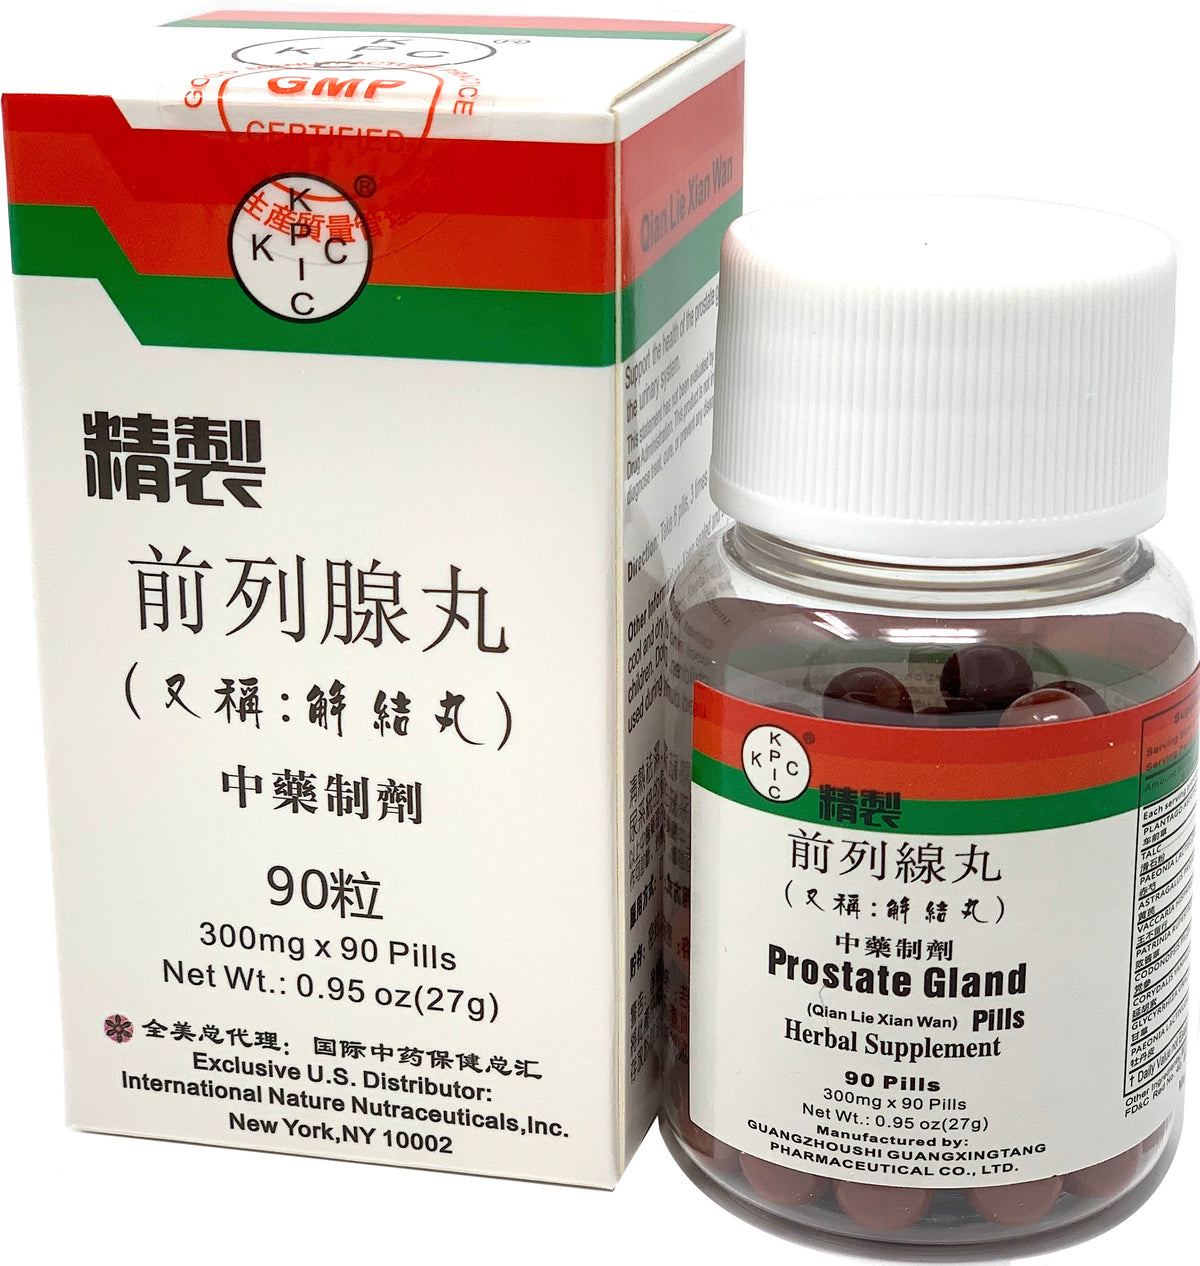 Prostate Gland Pills (Qian Lie Xian Wan)